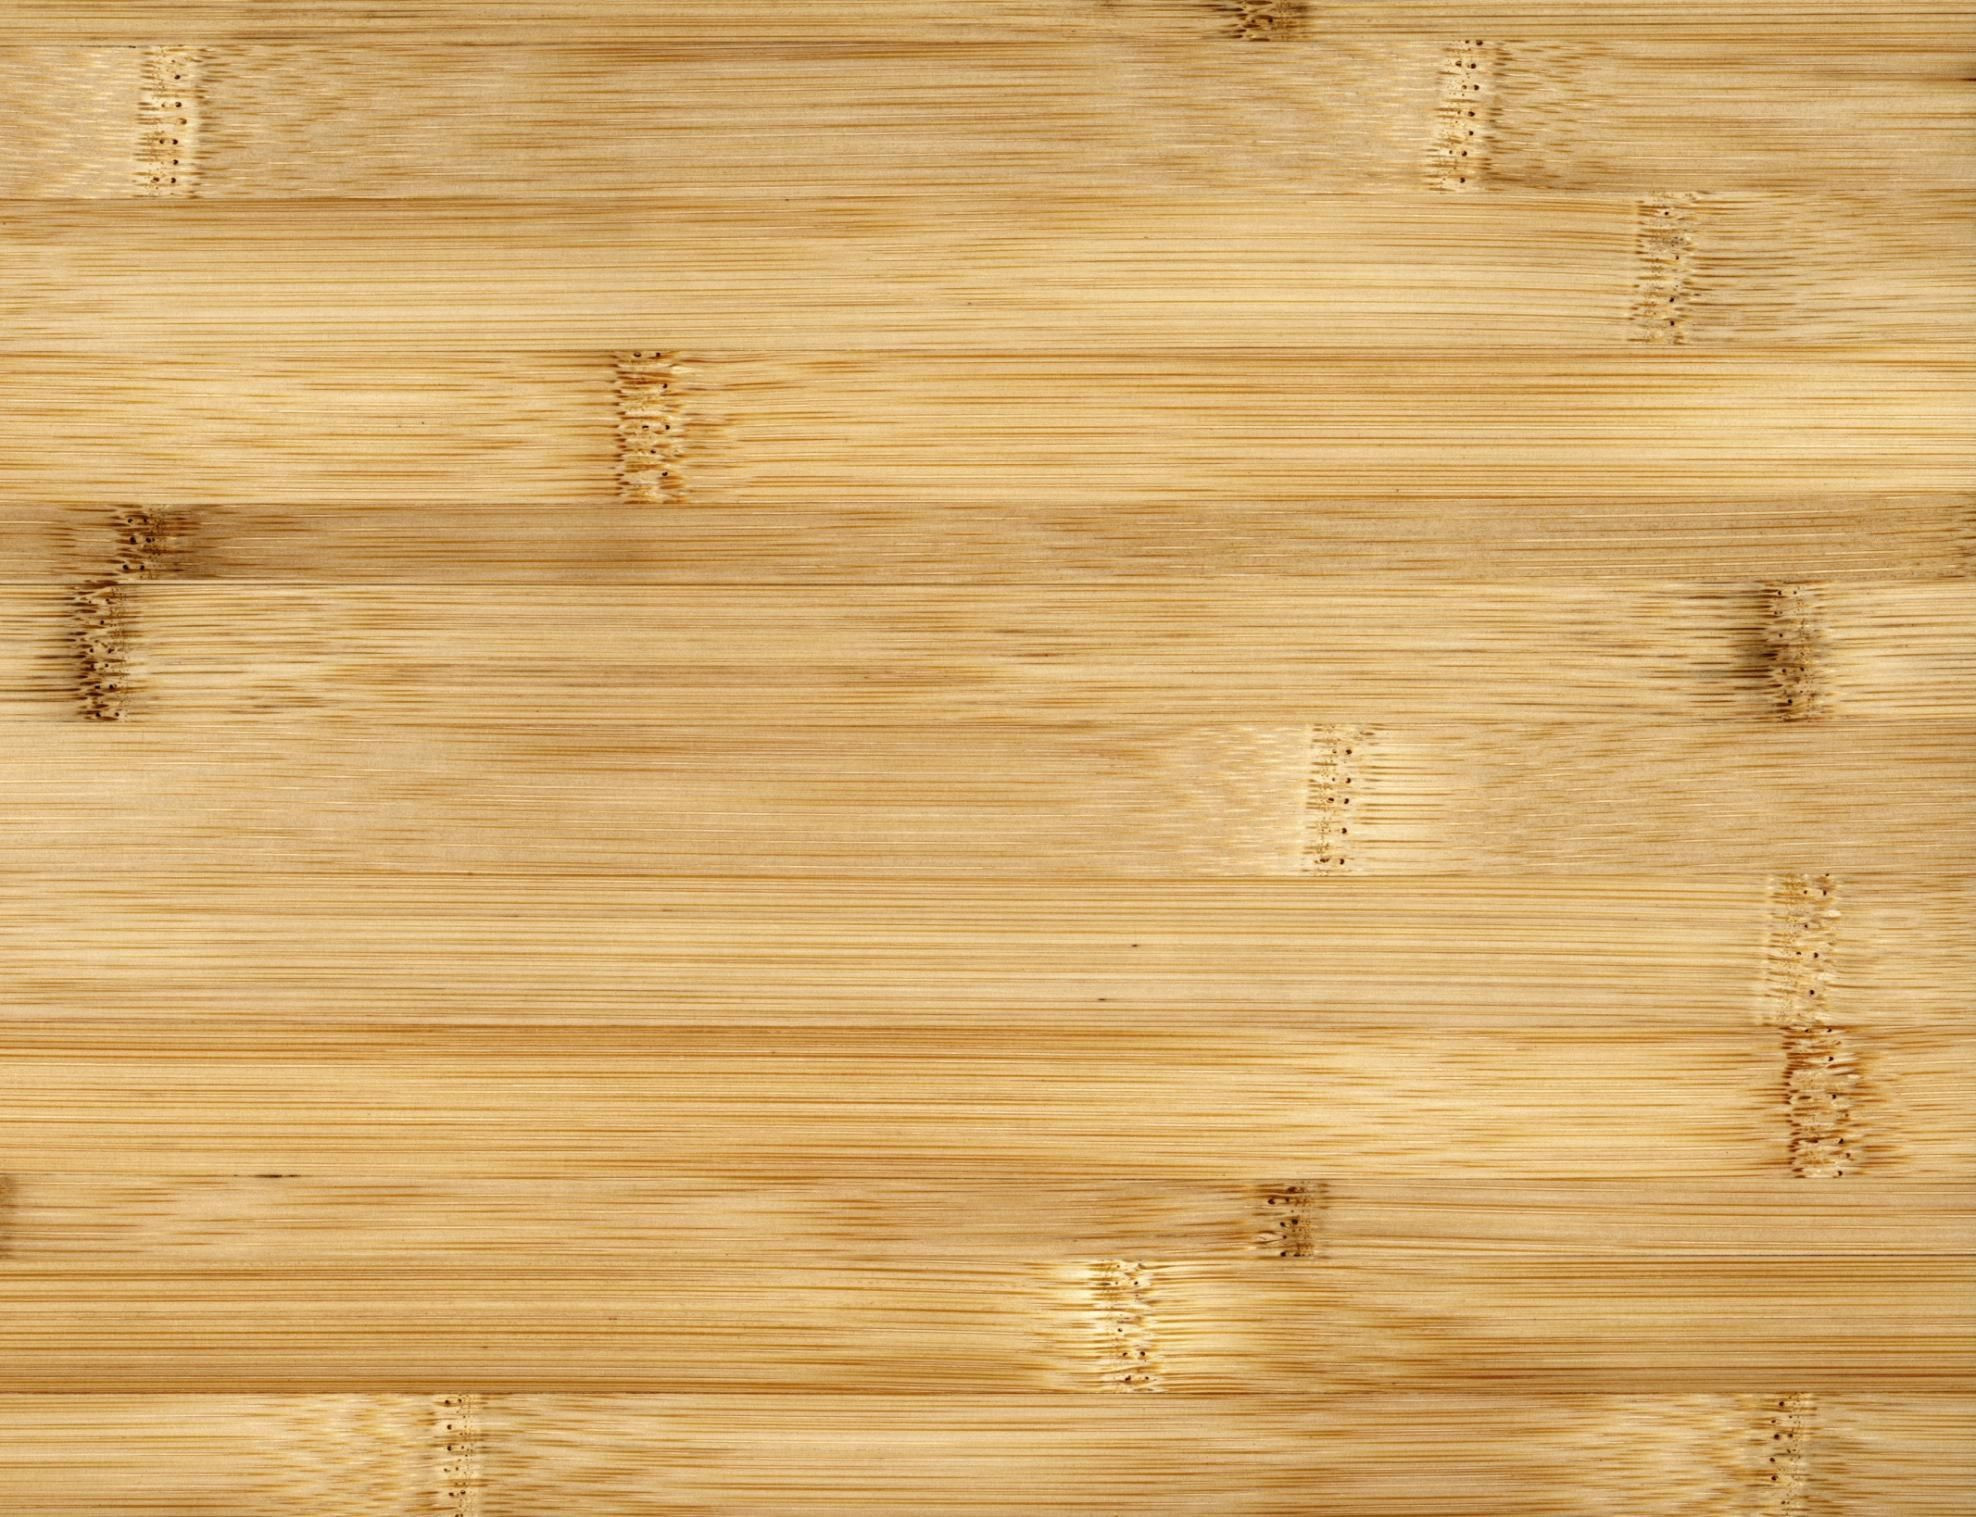 26 Wonderful Red Bamboo Floor Vase 2024 free download red bamboo floor vase of 18 new bamboo floors pics dizpos com in bamboo floors fresh 50 beautiful redoing hardwood floors 50 s stock of 18 new bamboo floors